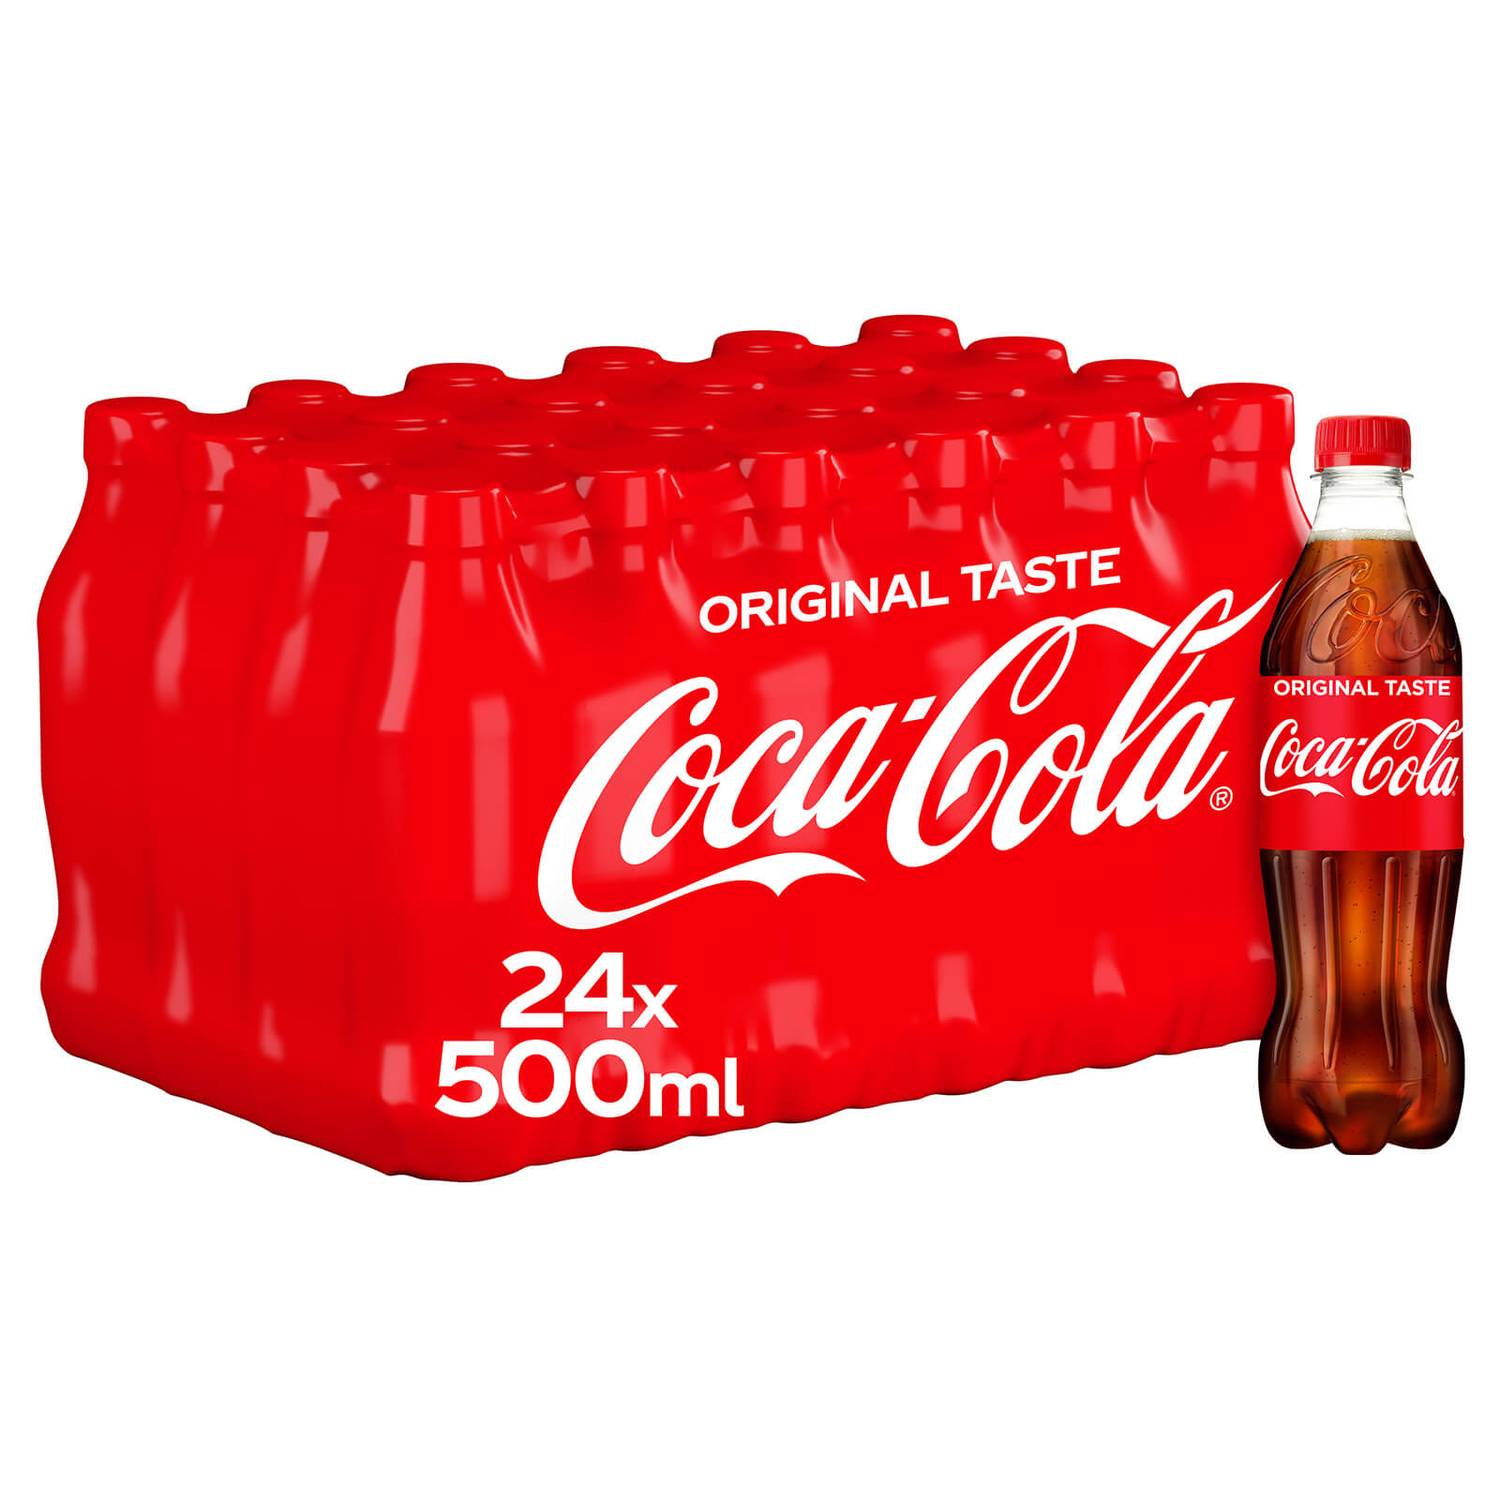 Coca-Cola Original Taste 24x500ml (Collection-Only)